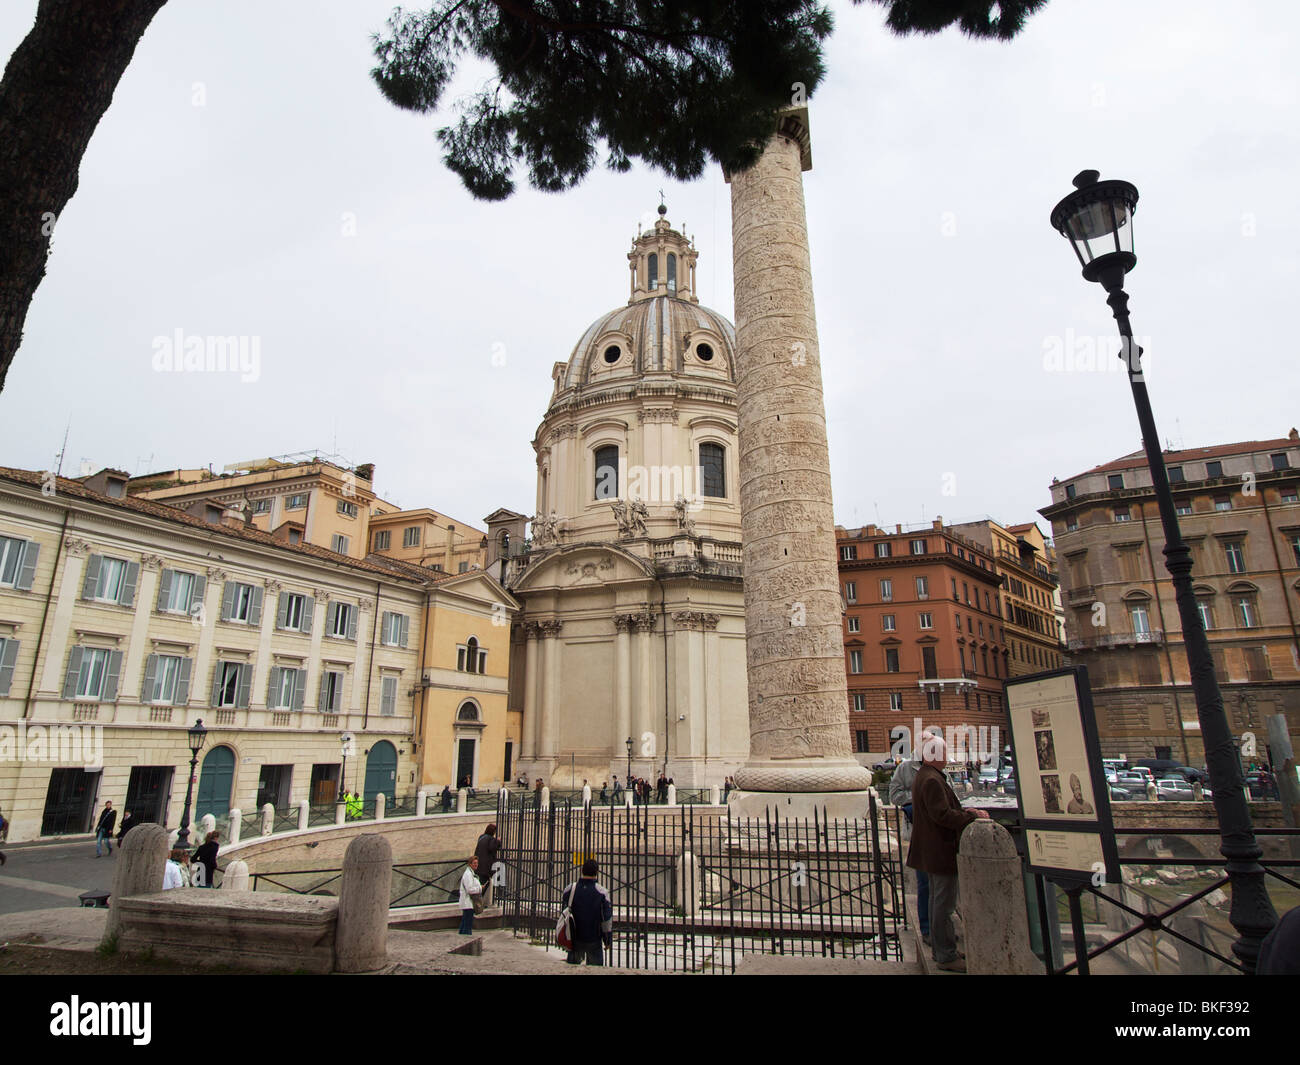 Trajan Column of the Trajan Forum in the city center of Rome, Italy Stock Photo